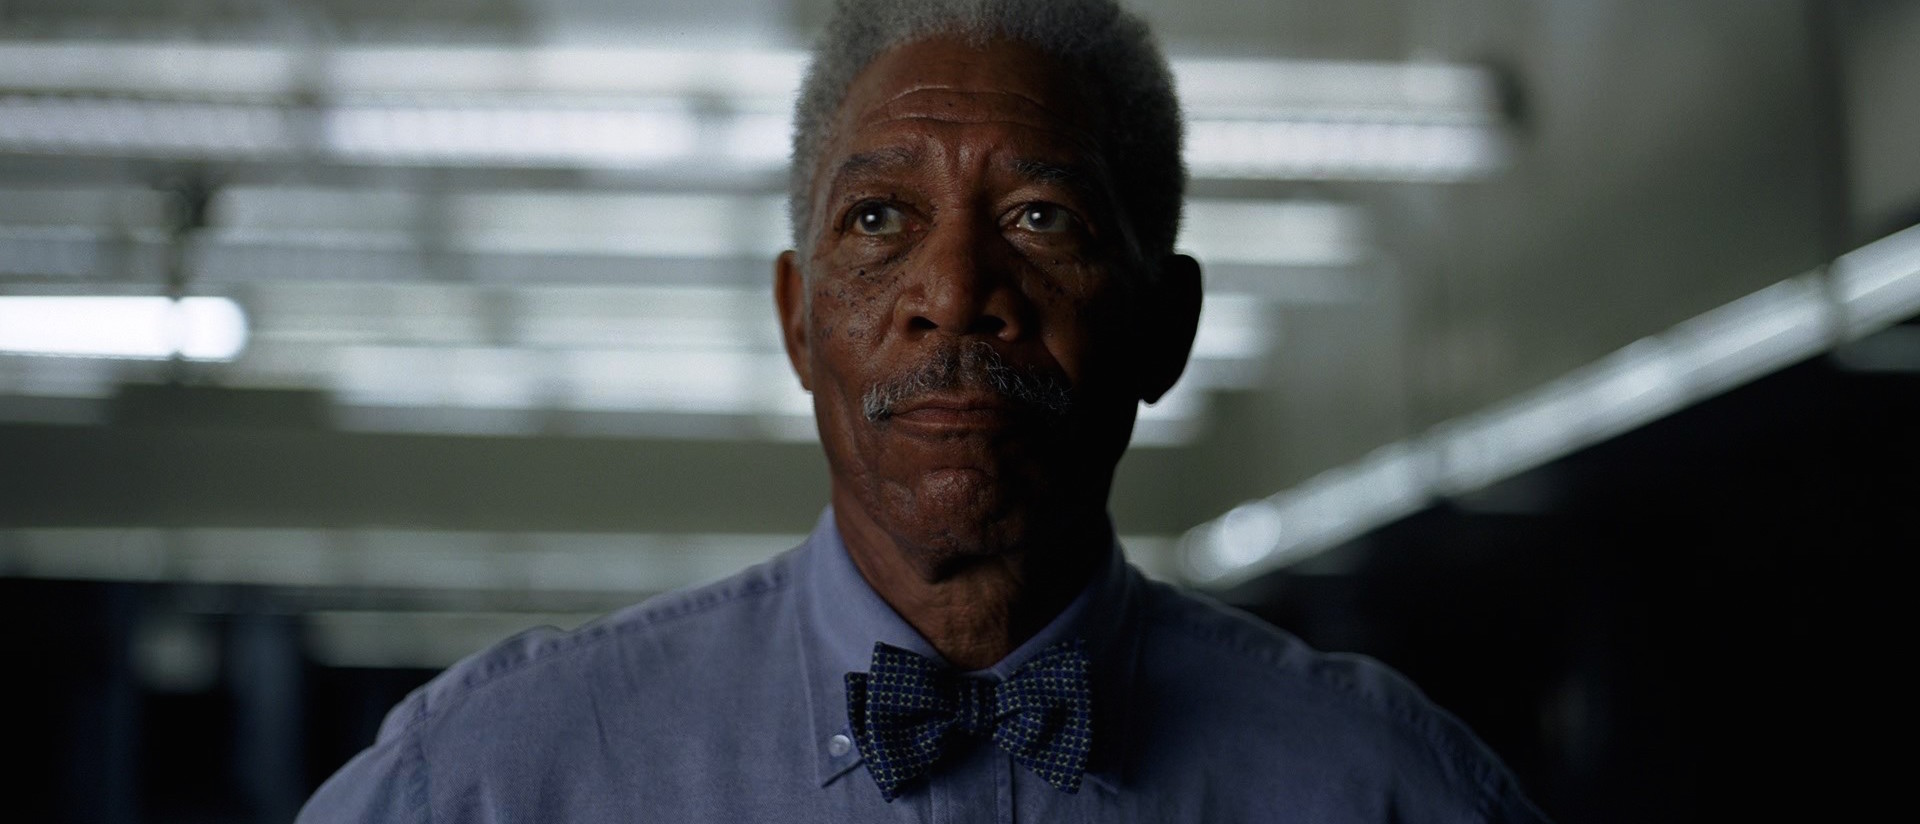 Morgan-Freeman-as-Lucius-Fox.jpeg